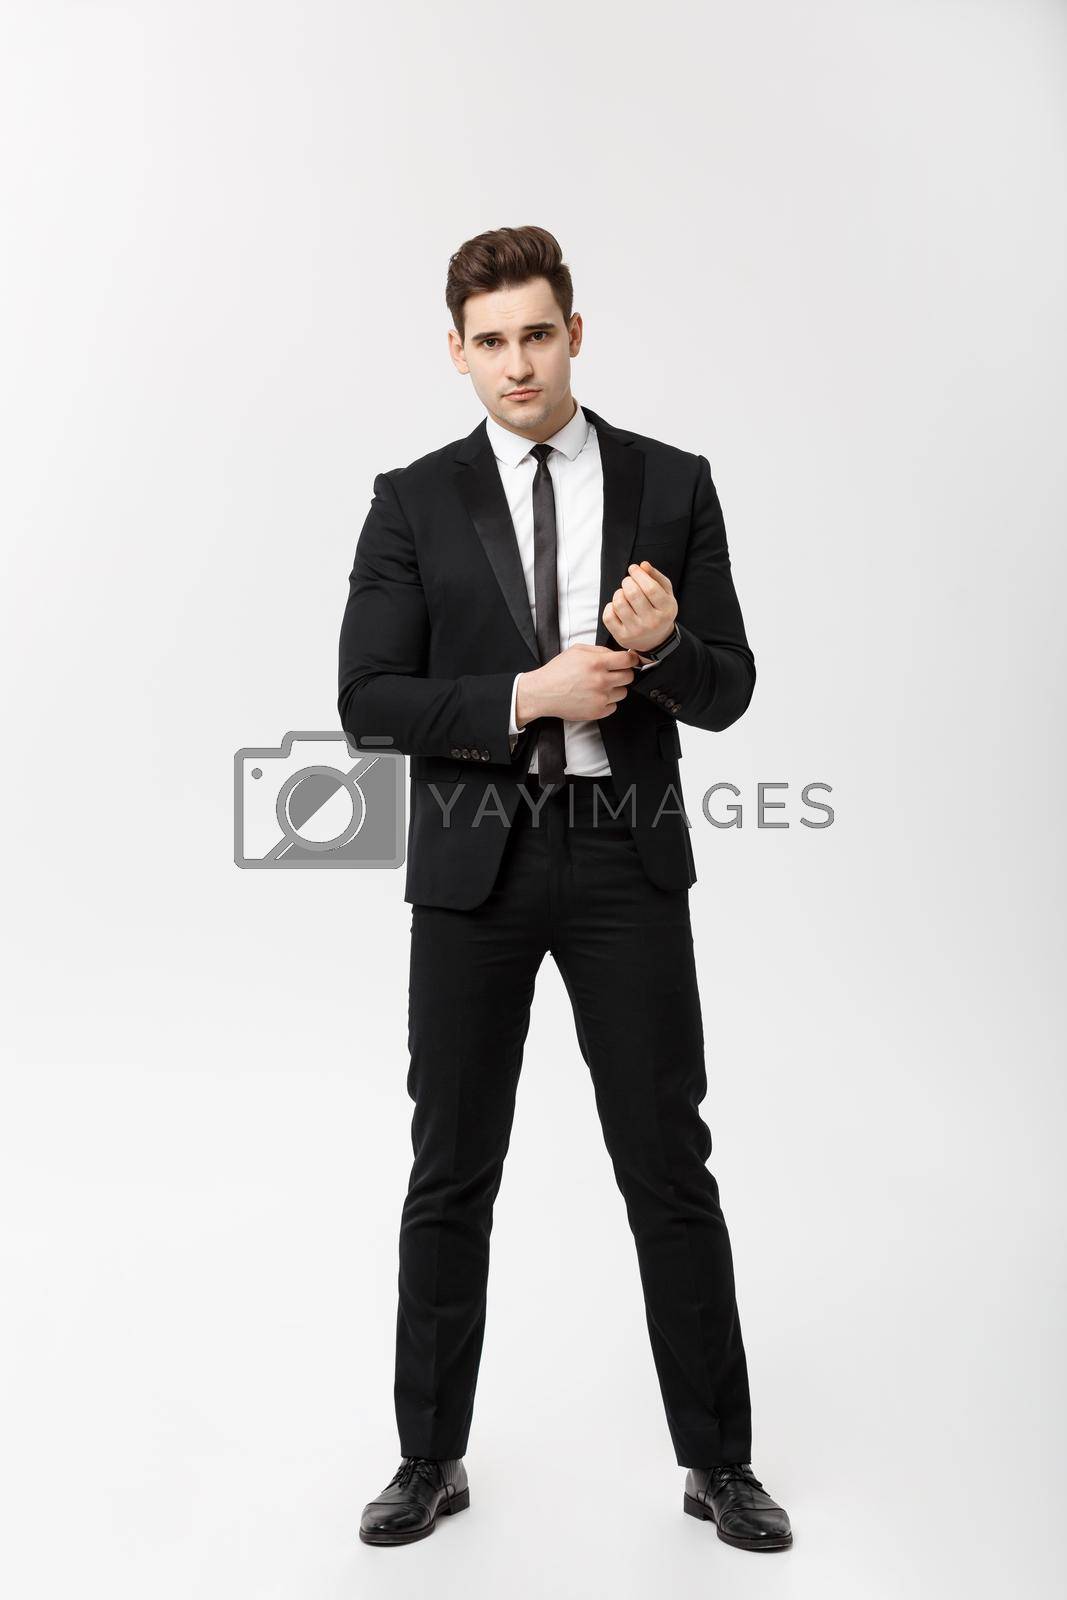 Royalty free image of Full length Portrait Businessman posing stylishly on white background. by Benzoix